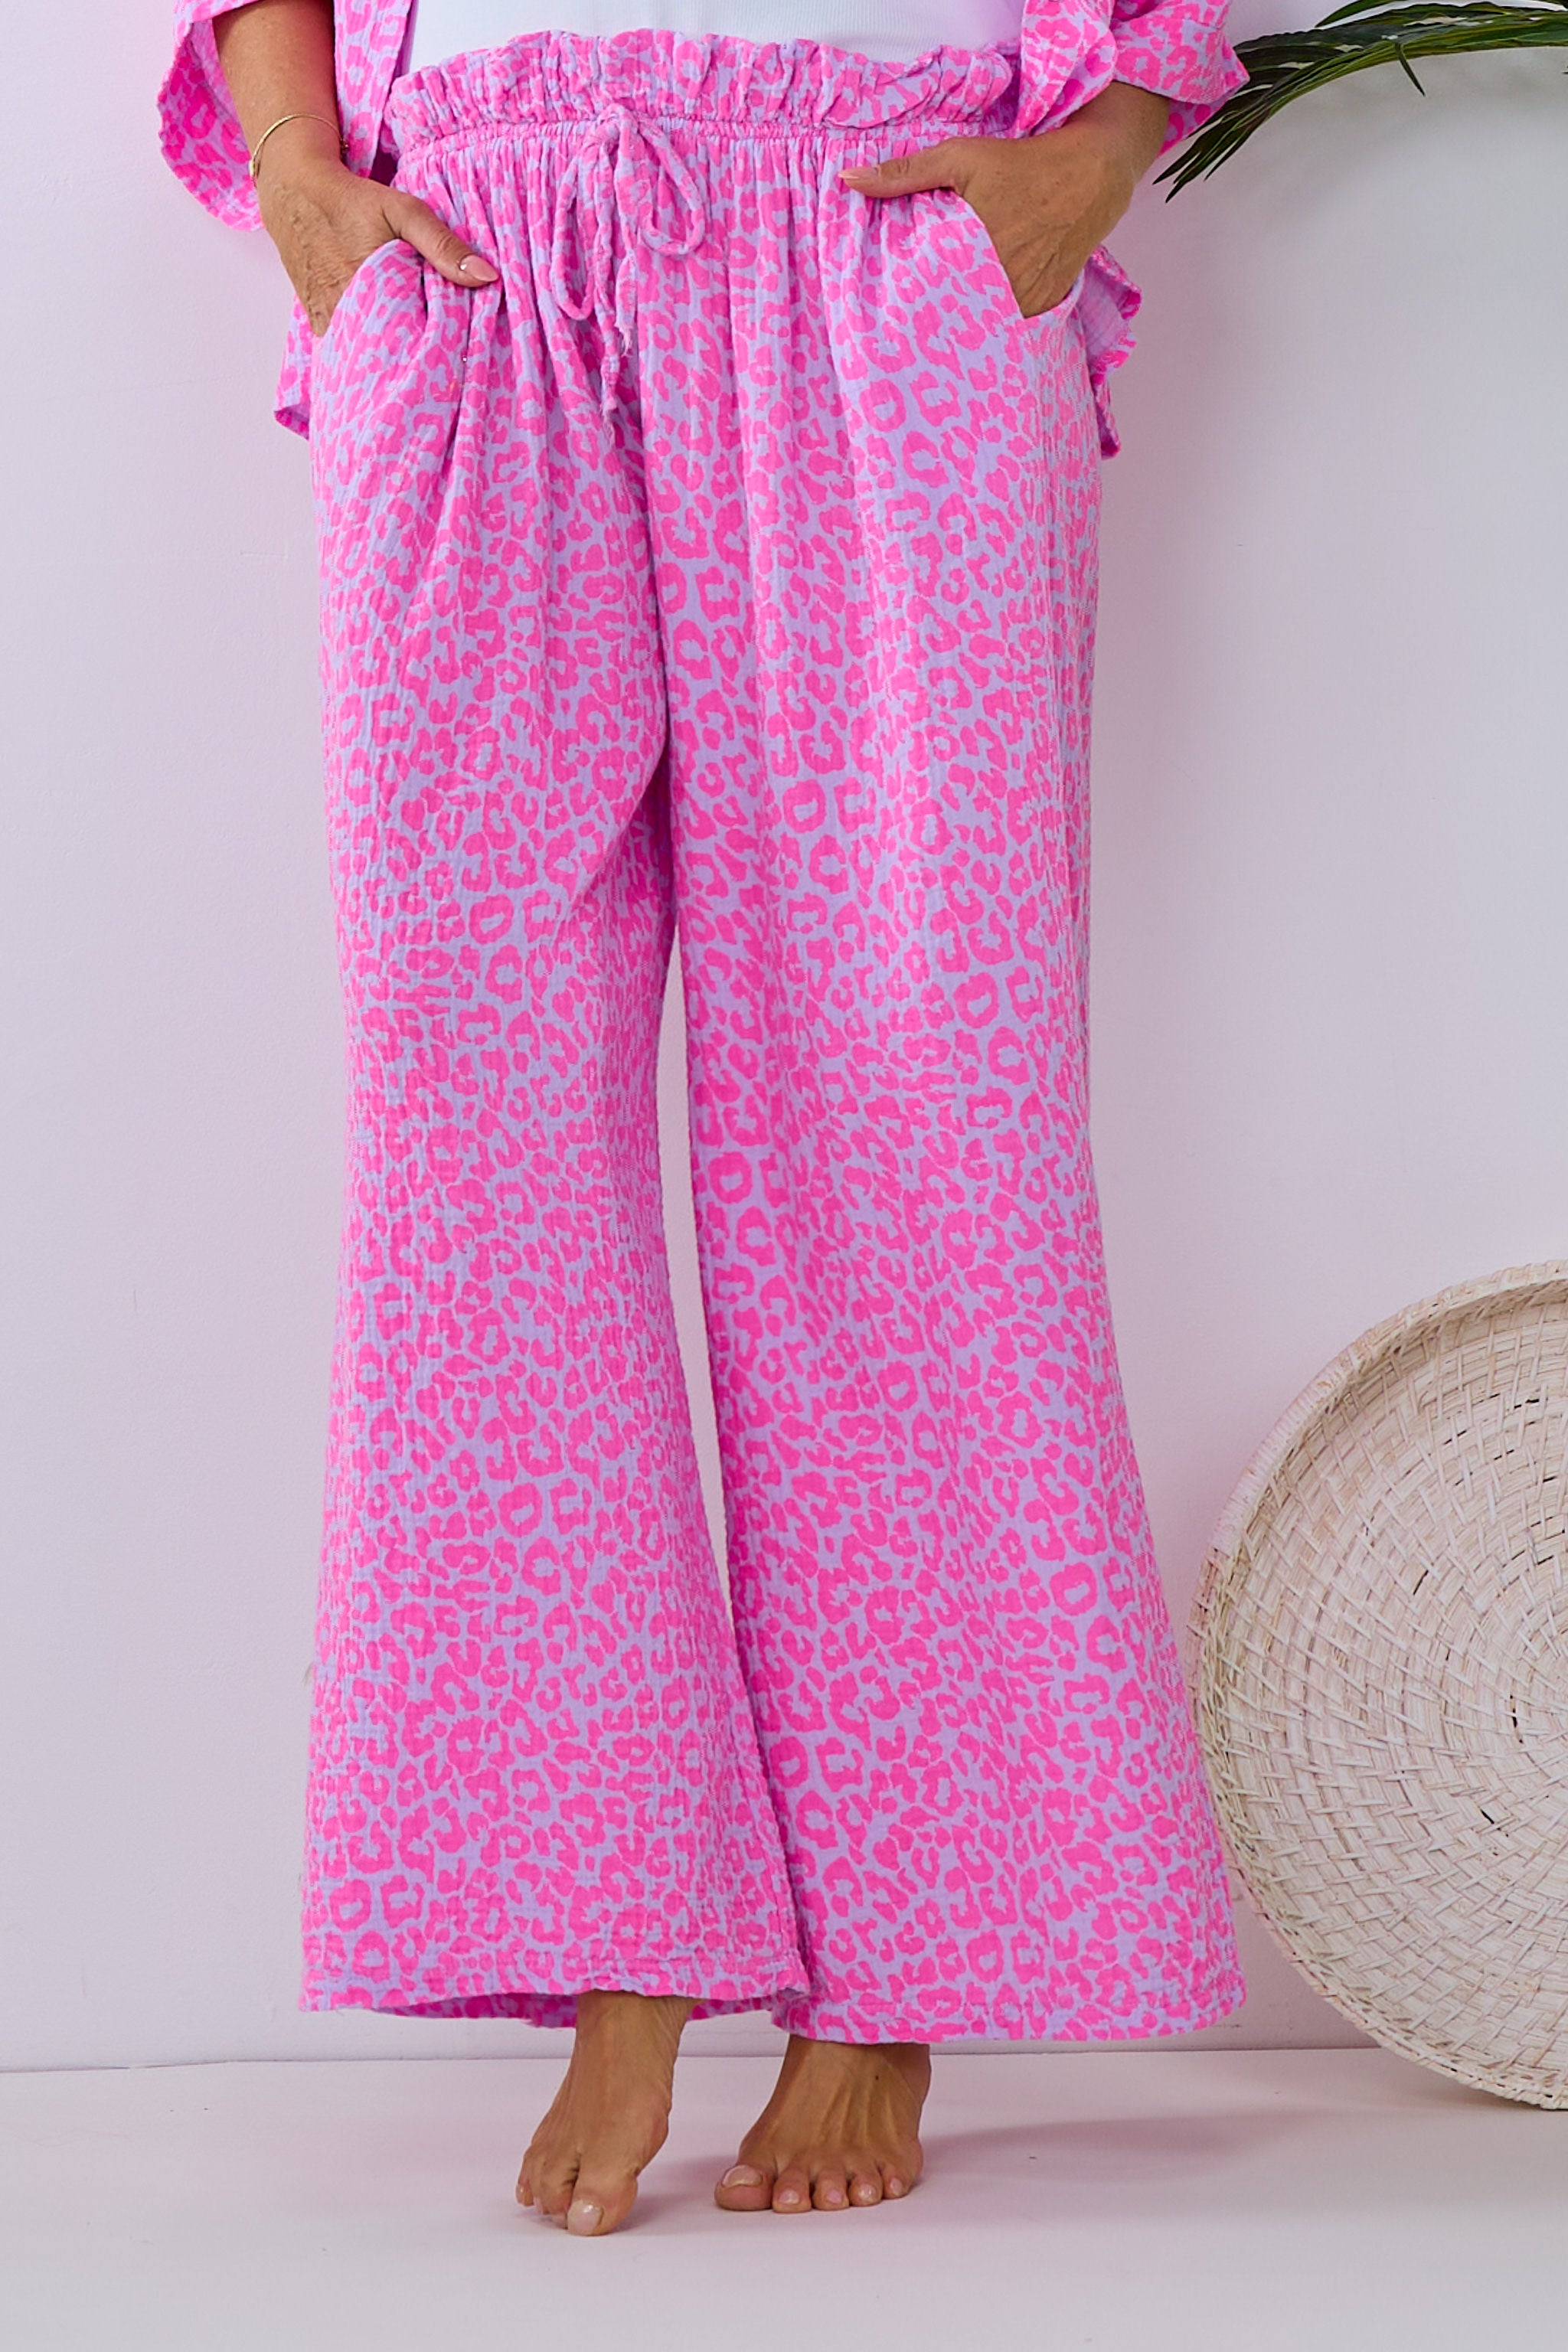 Damen Musselin Hose pink-flieder Trends & Lifestyle